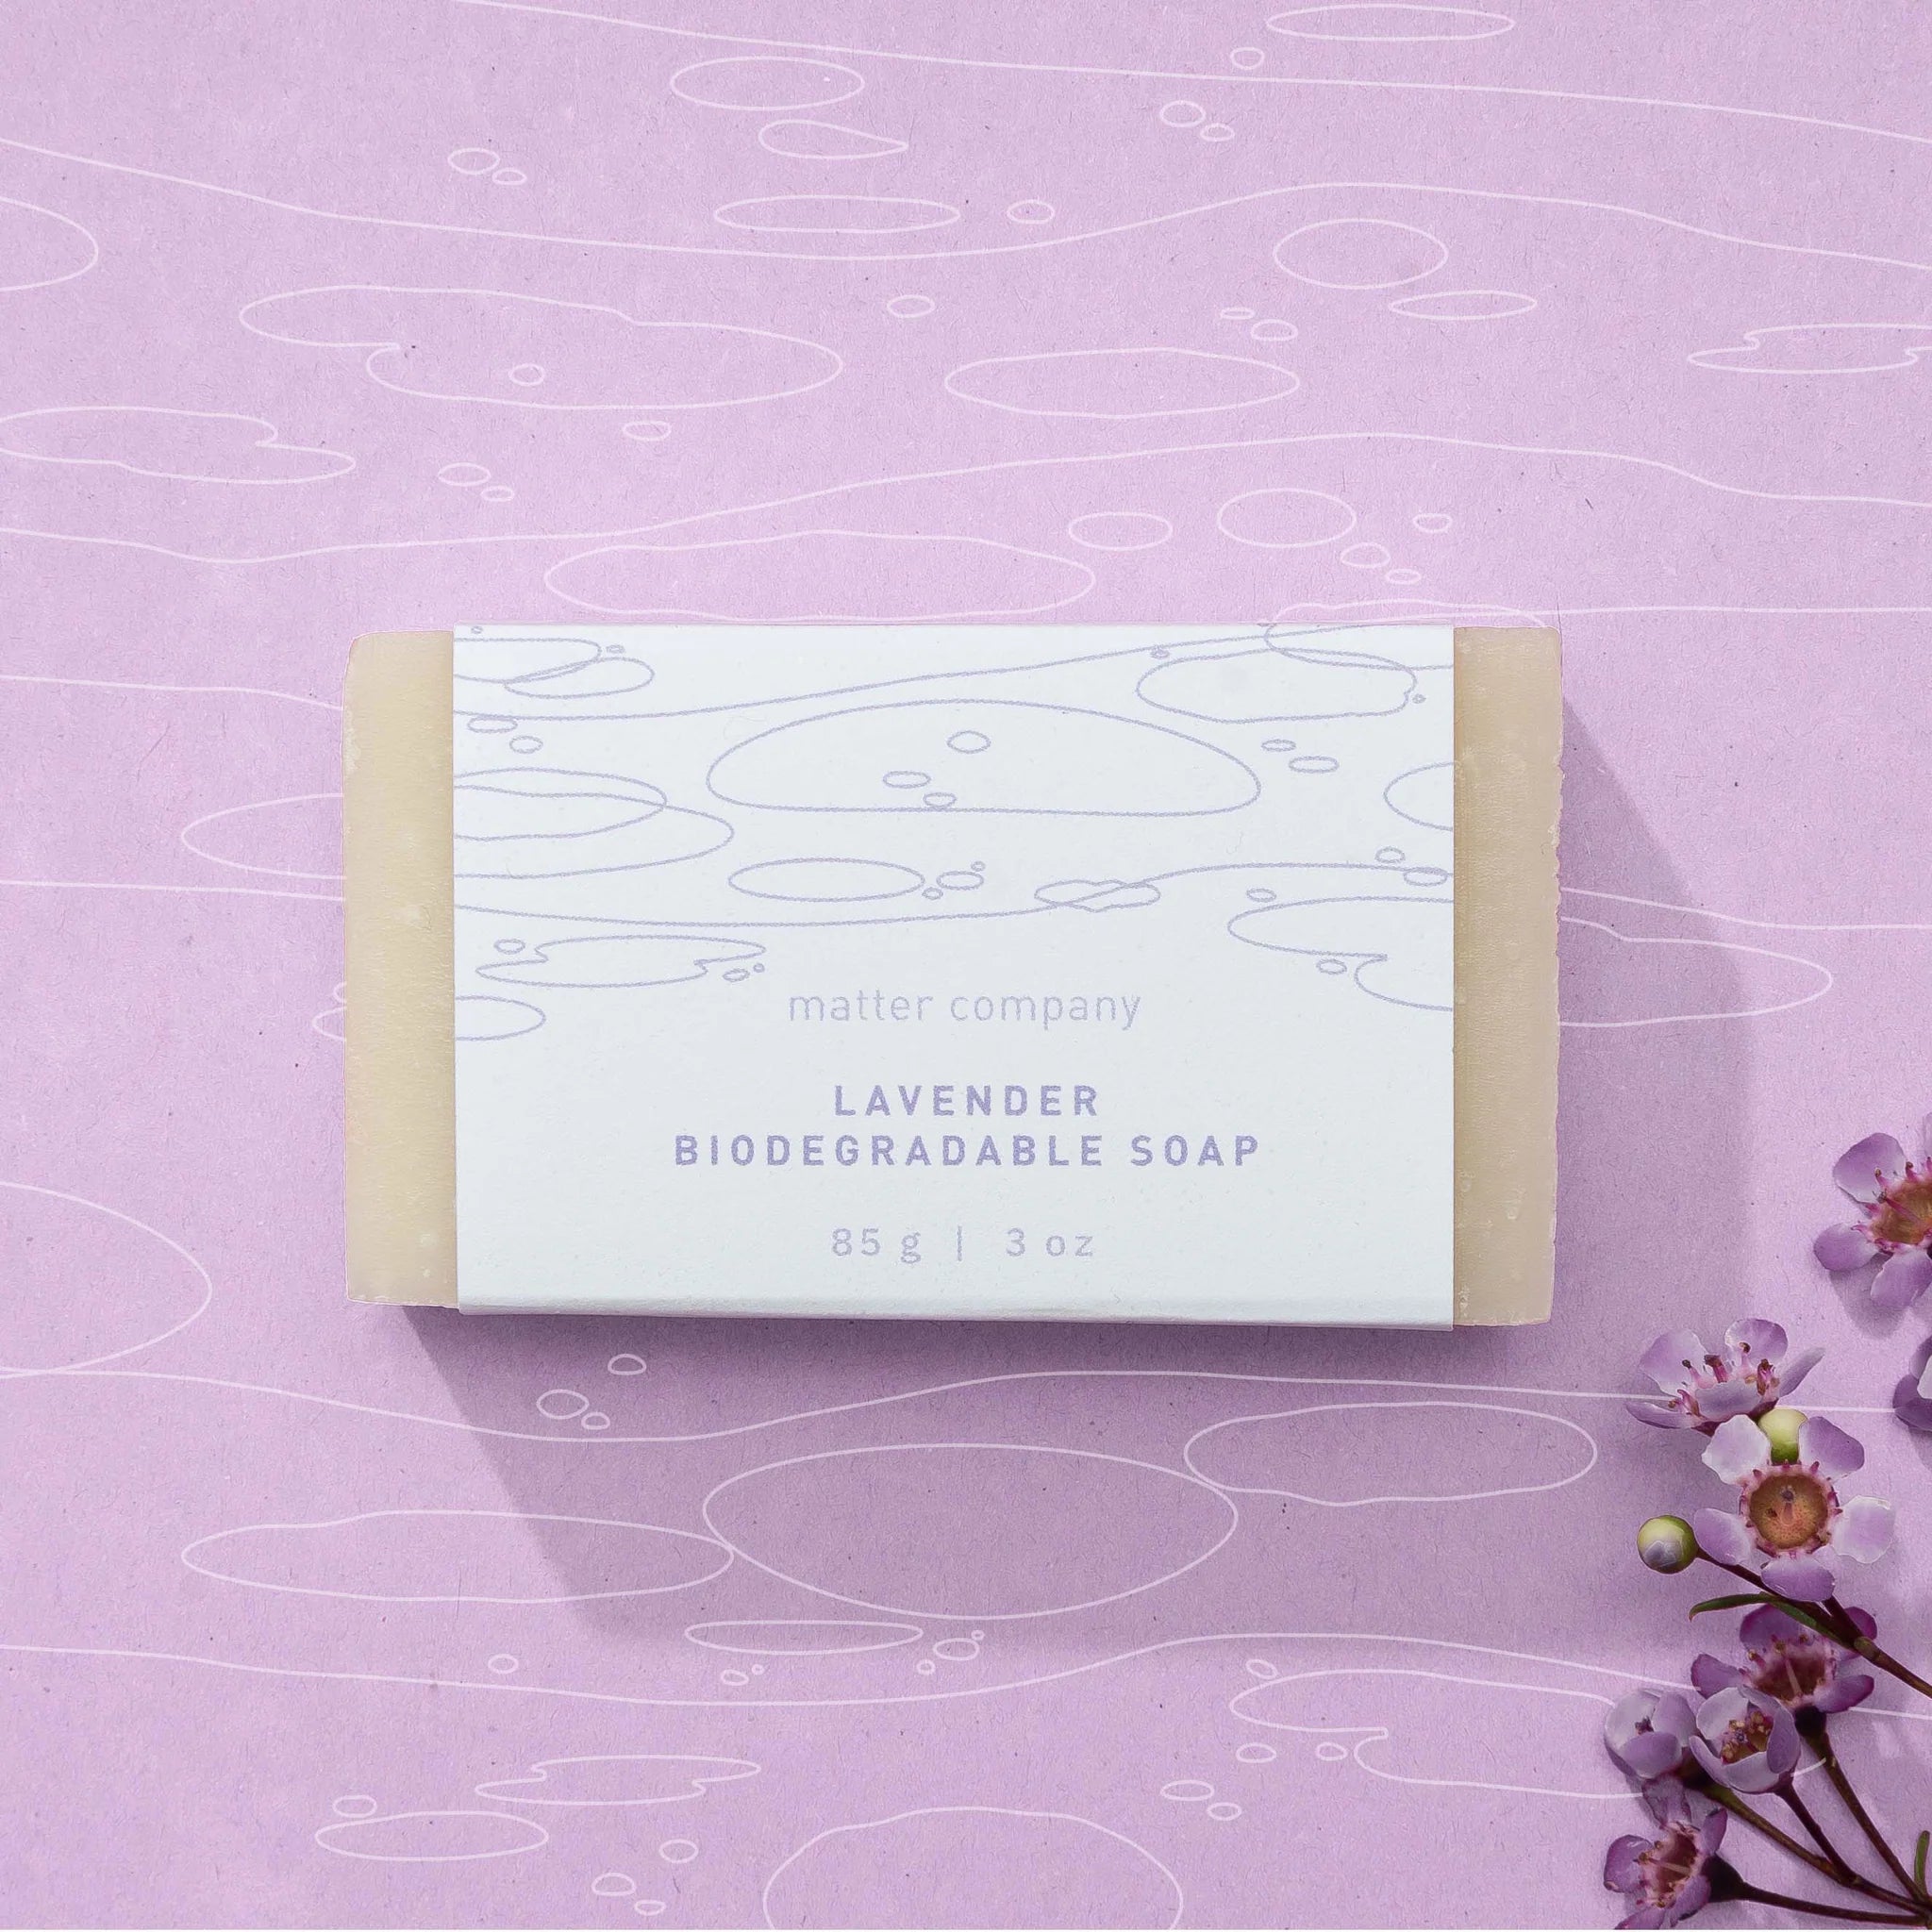 Matter Company - Biodegradable Soap - Lavender